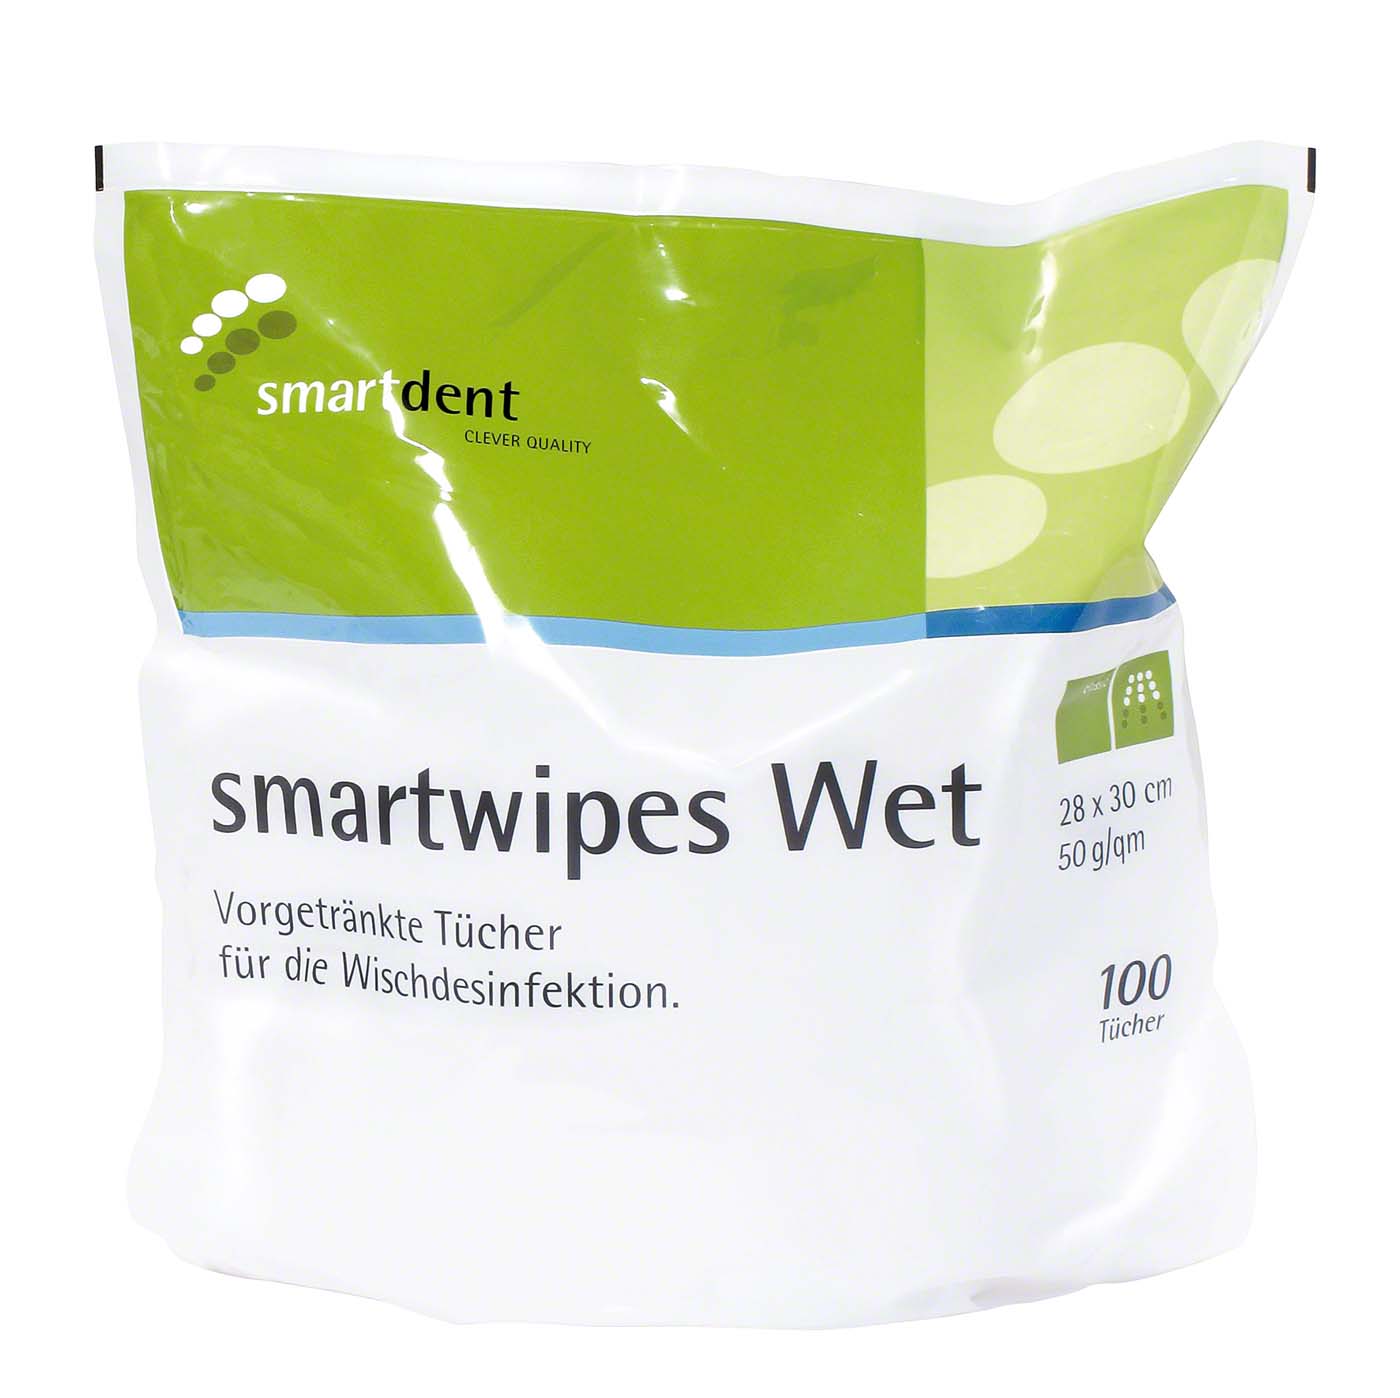 smartwipes Wet smartdent